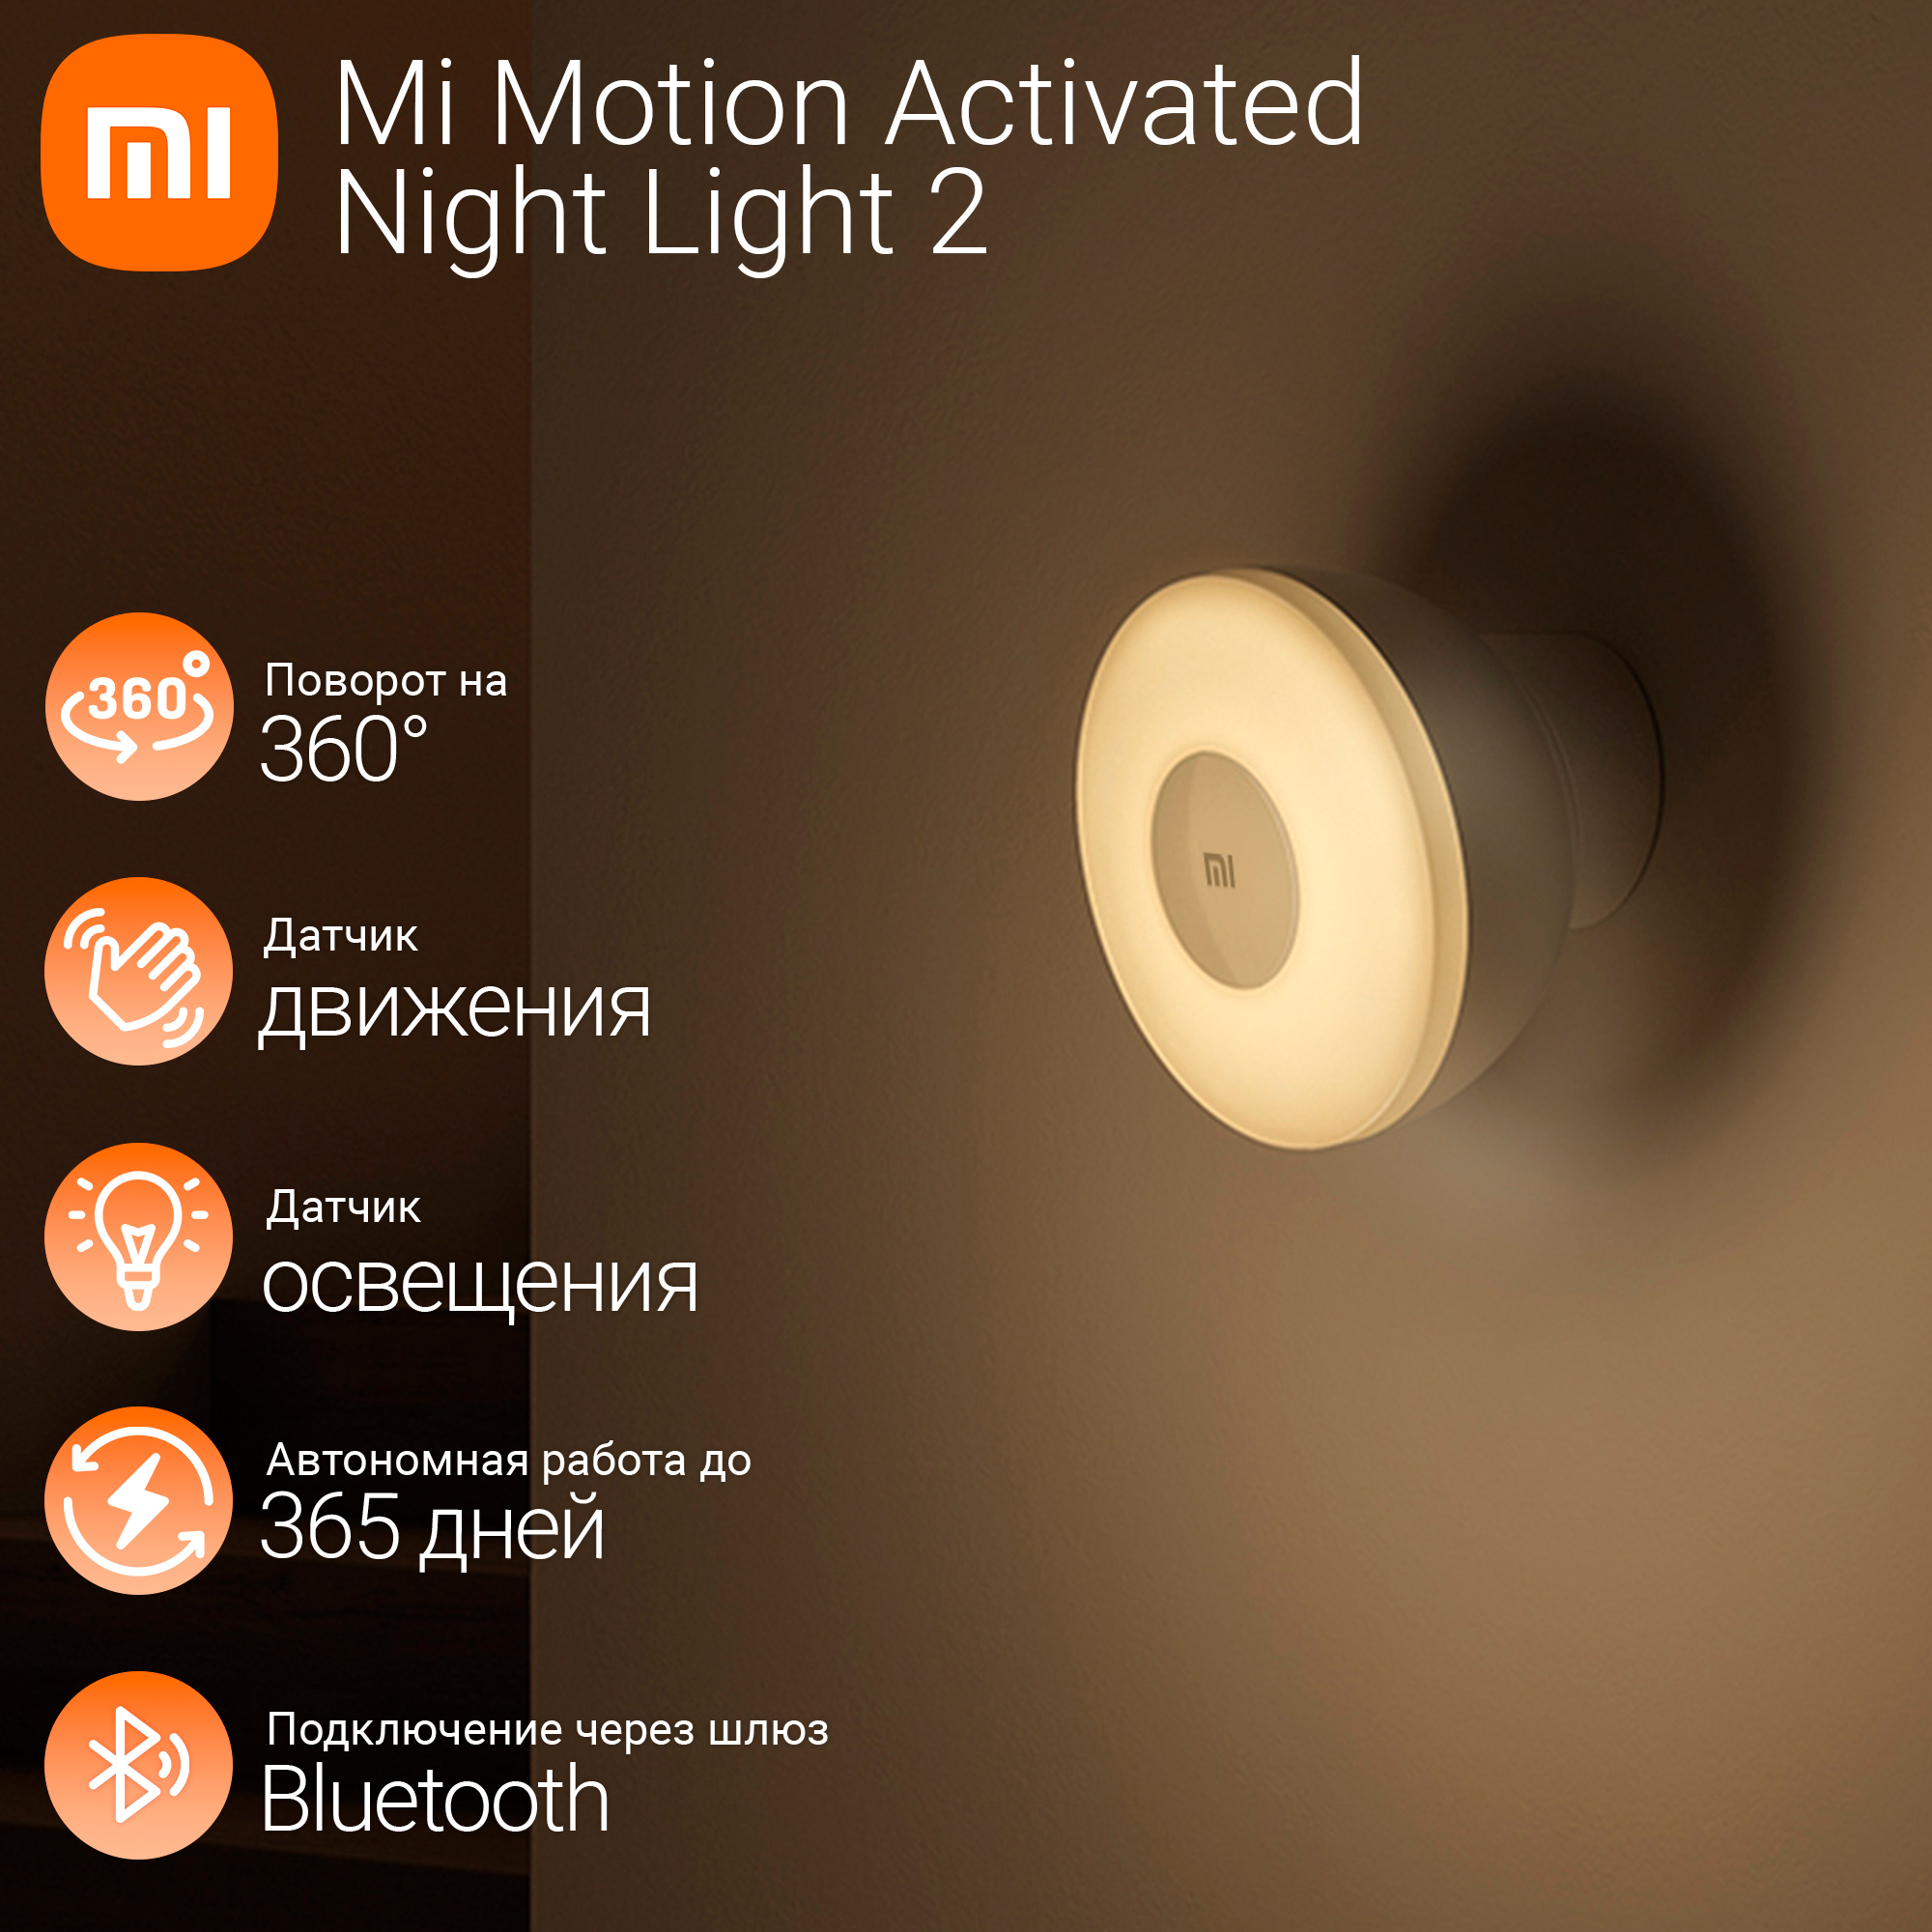 Mi motion night light 2. Ночник с датчиком движения mi Motion-activated Night Light 2. Xiaomi mi Motion-activated Night Light 2 Bluetooth bhr5278gl. Ночник Сяоми с датчиком движения. Светильник карманный Сяоми.